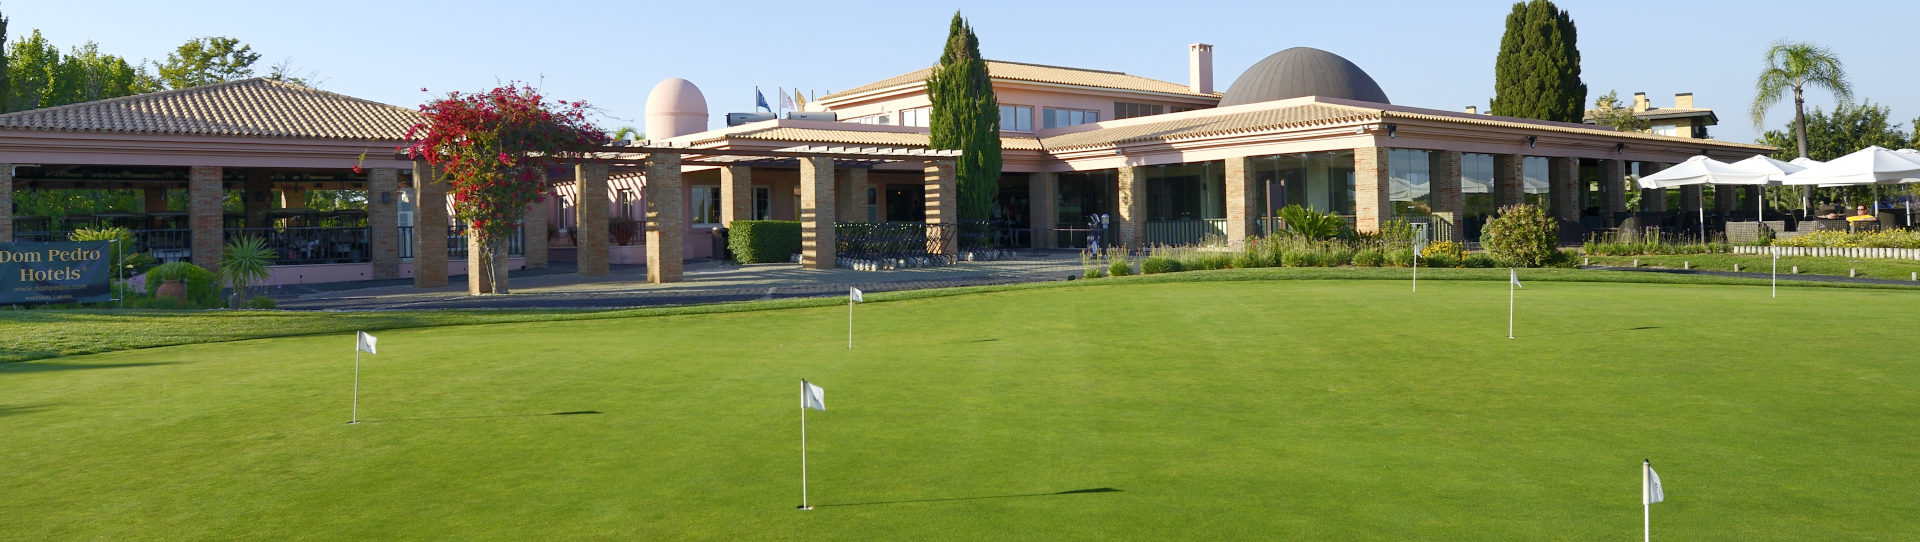 Portugal golf courses - Vilamoura Millennium golf course - Photo 3